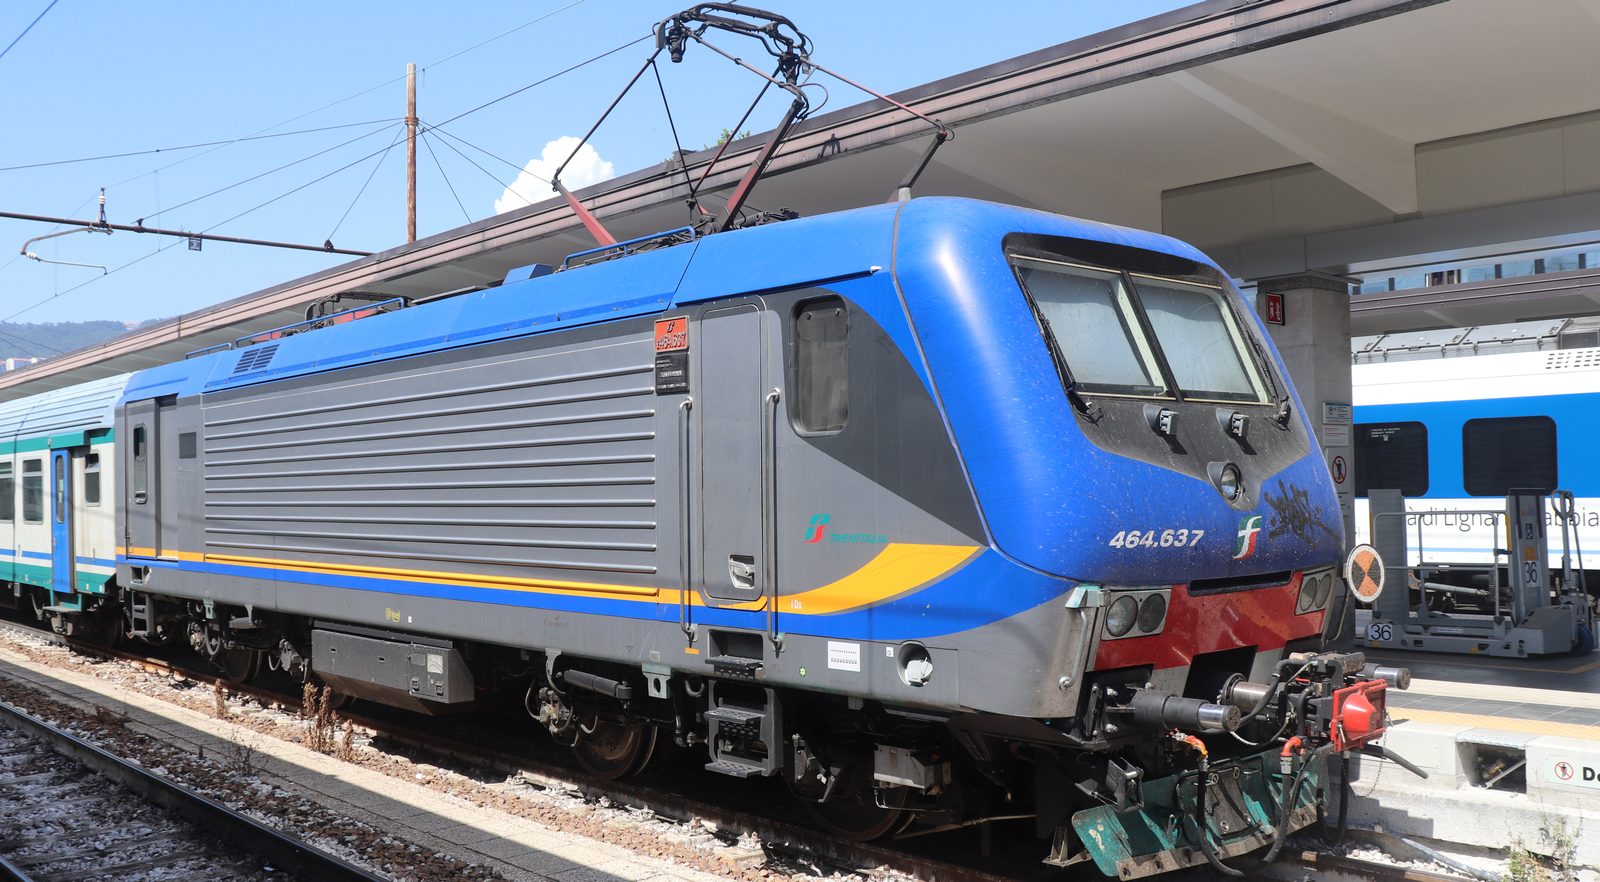 E.464.637 in June 2019 in Trieste